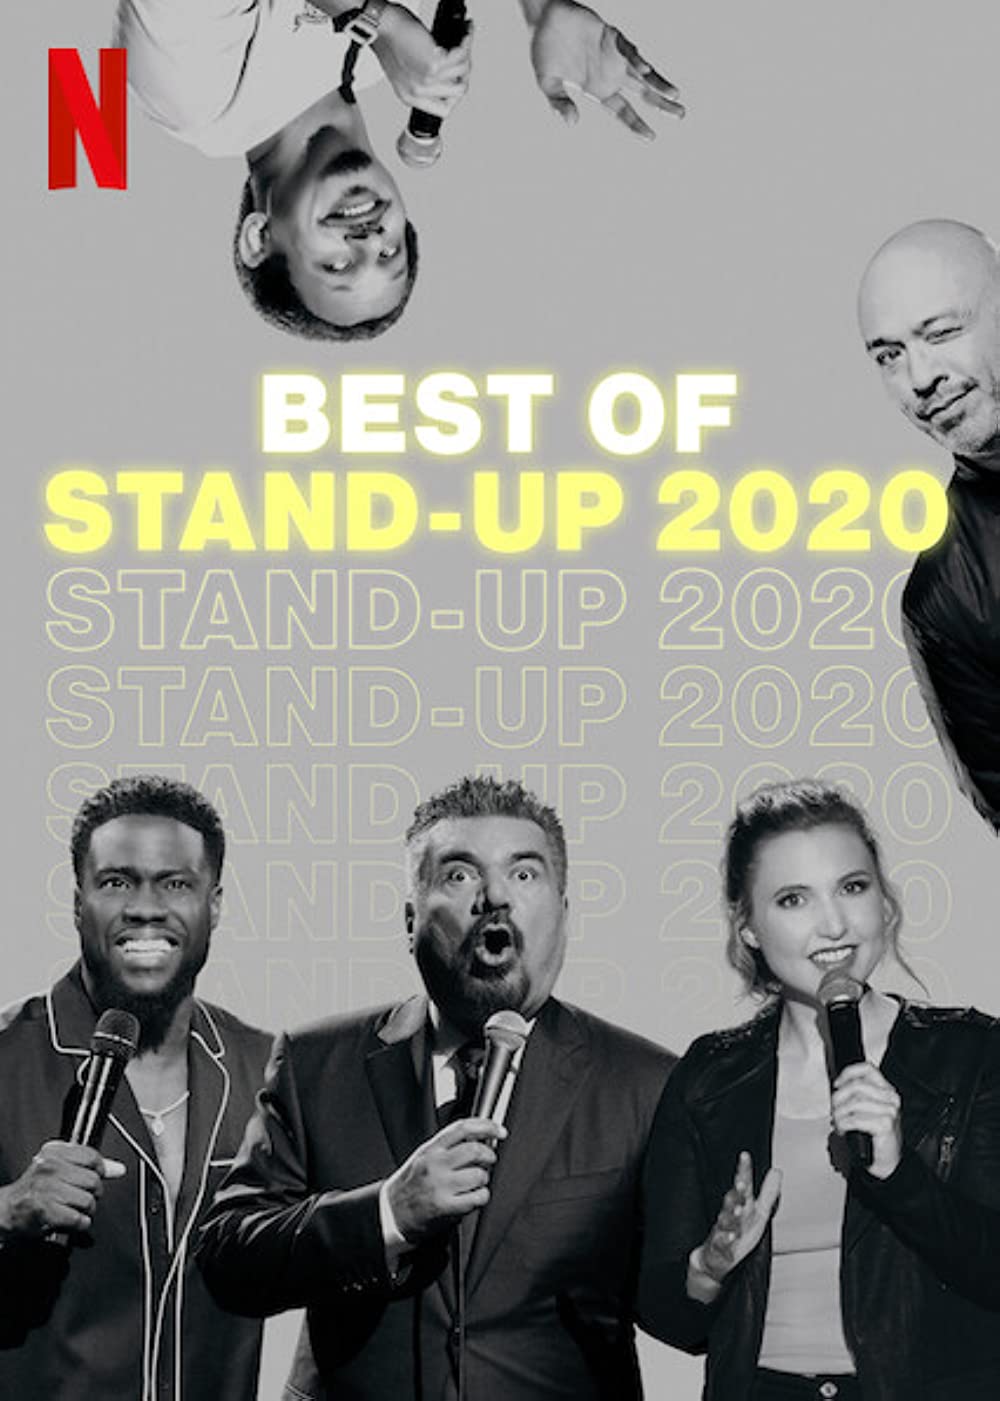 Filmbeschreibung zu Best of Stand-Up 2020